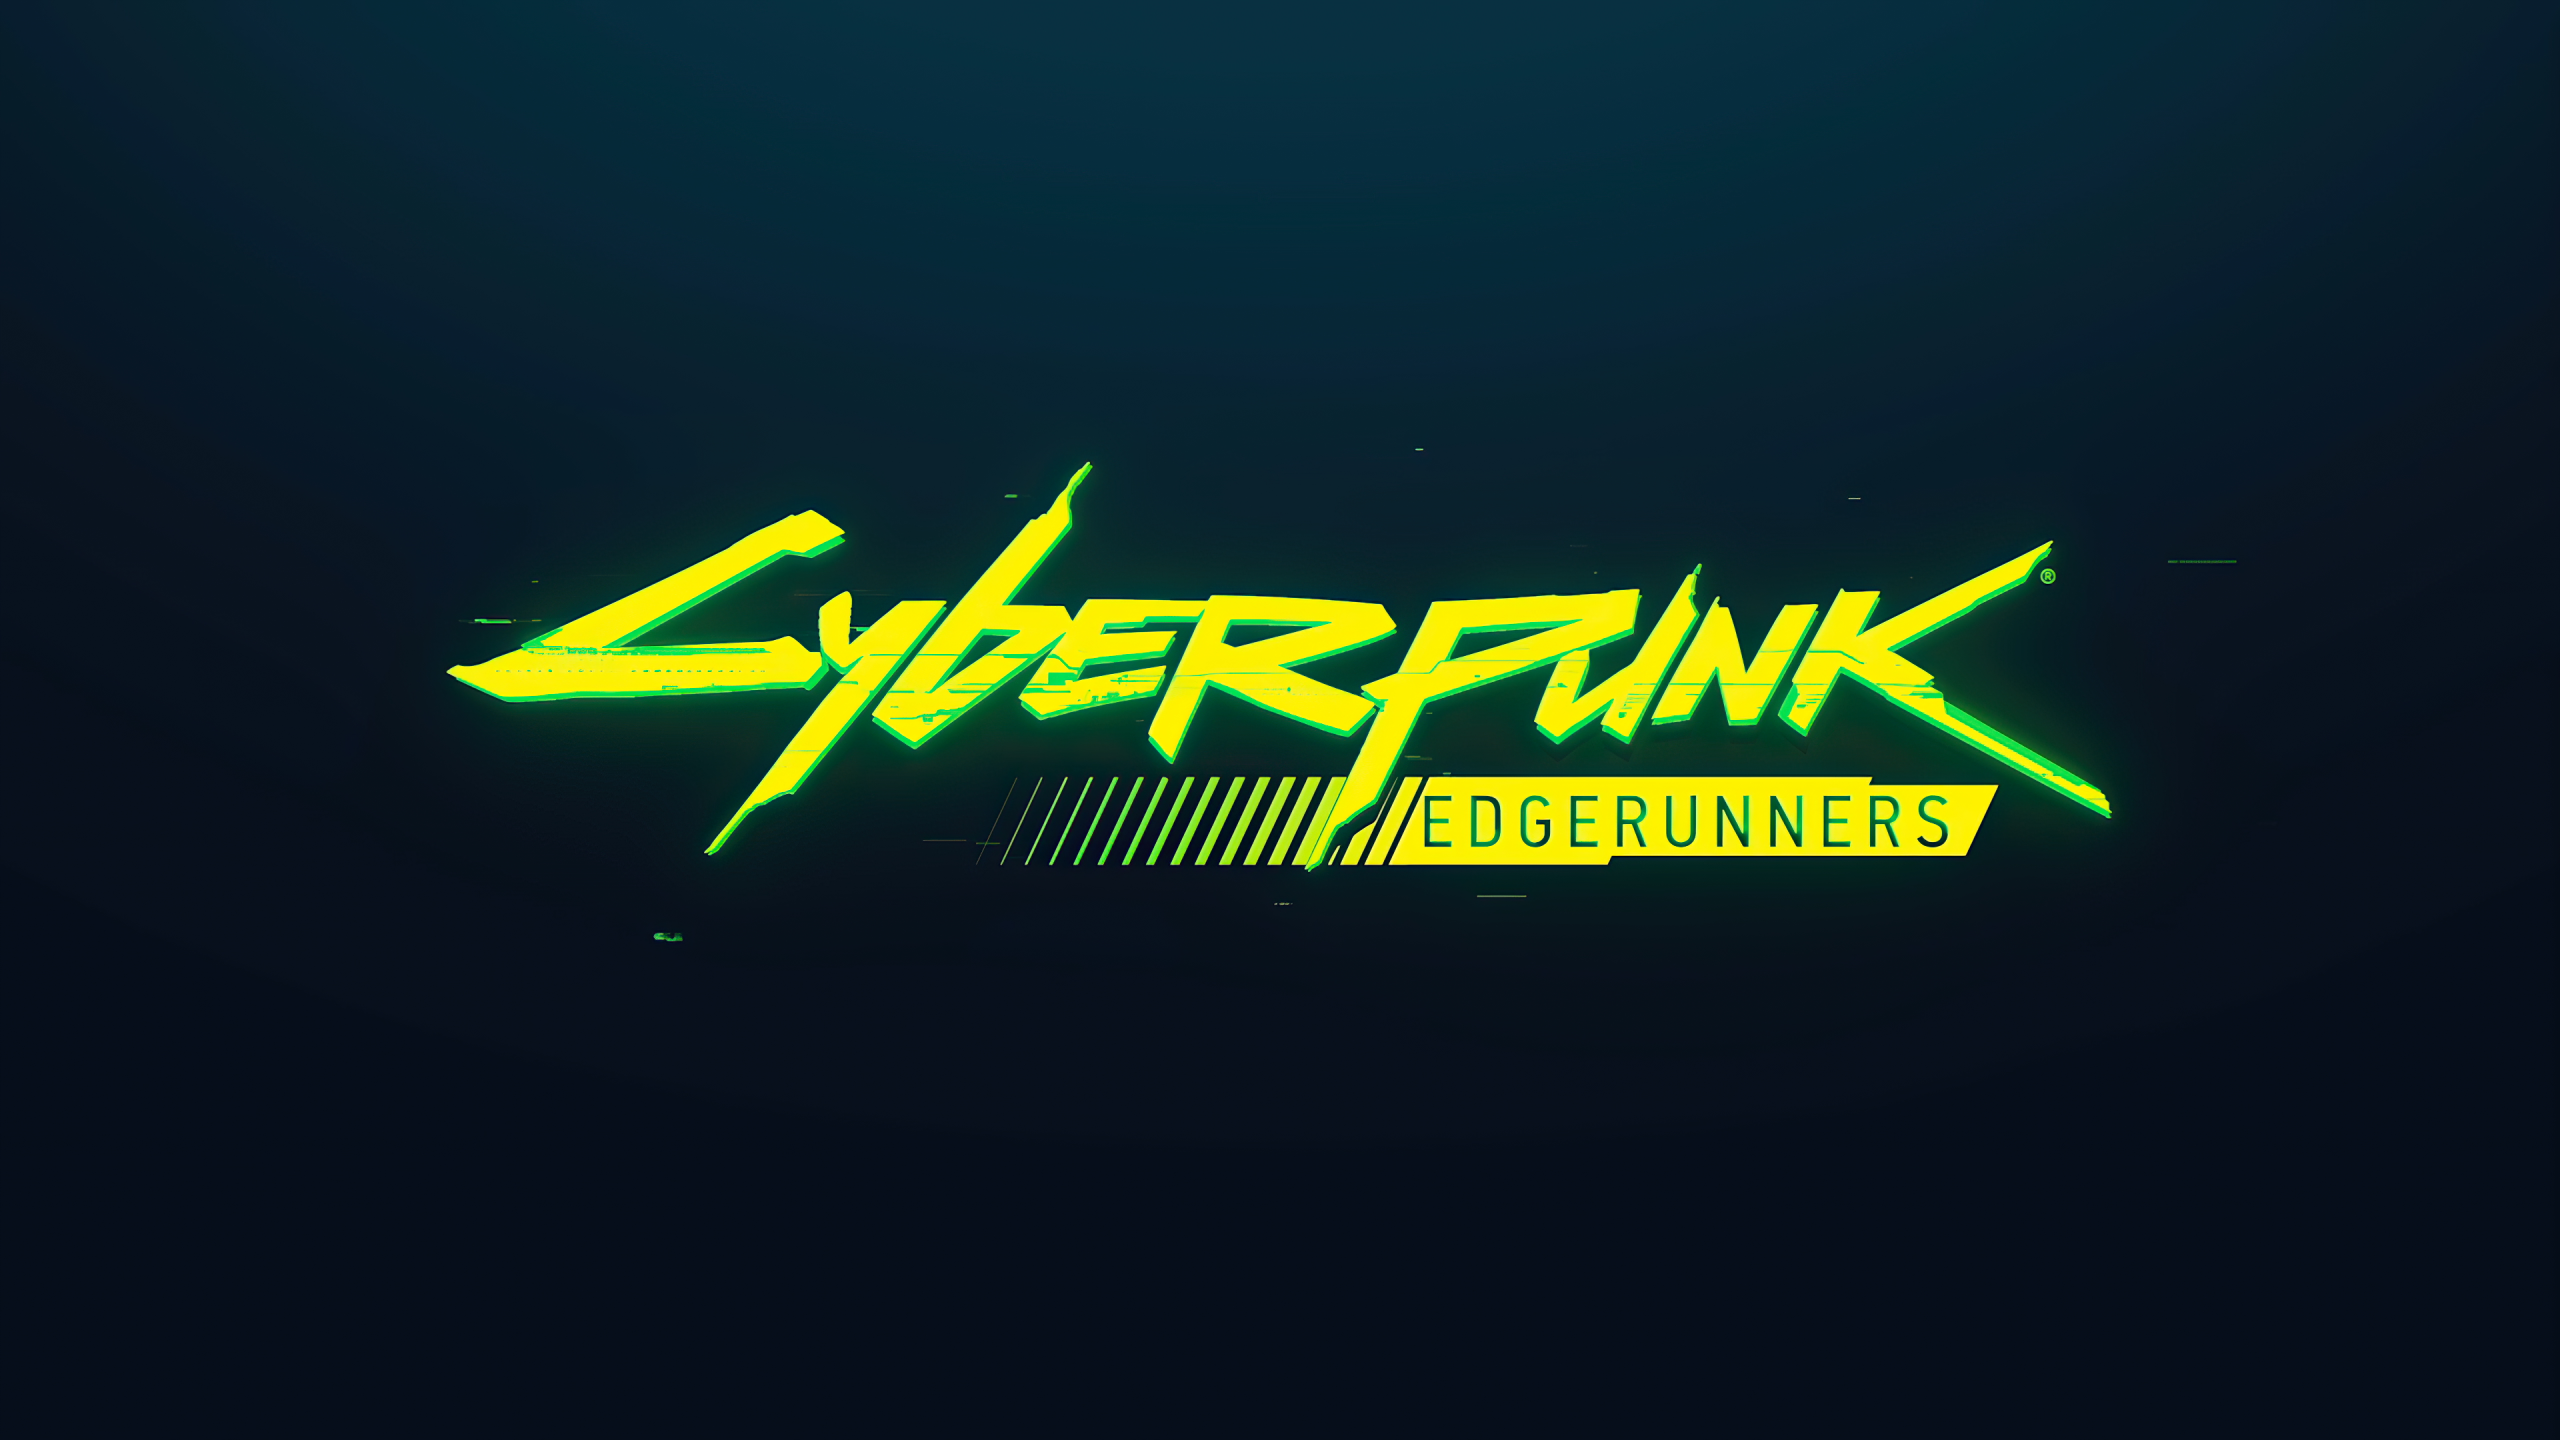 скачать логотип cyberpunk фото 43